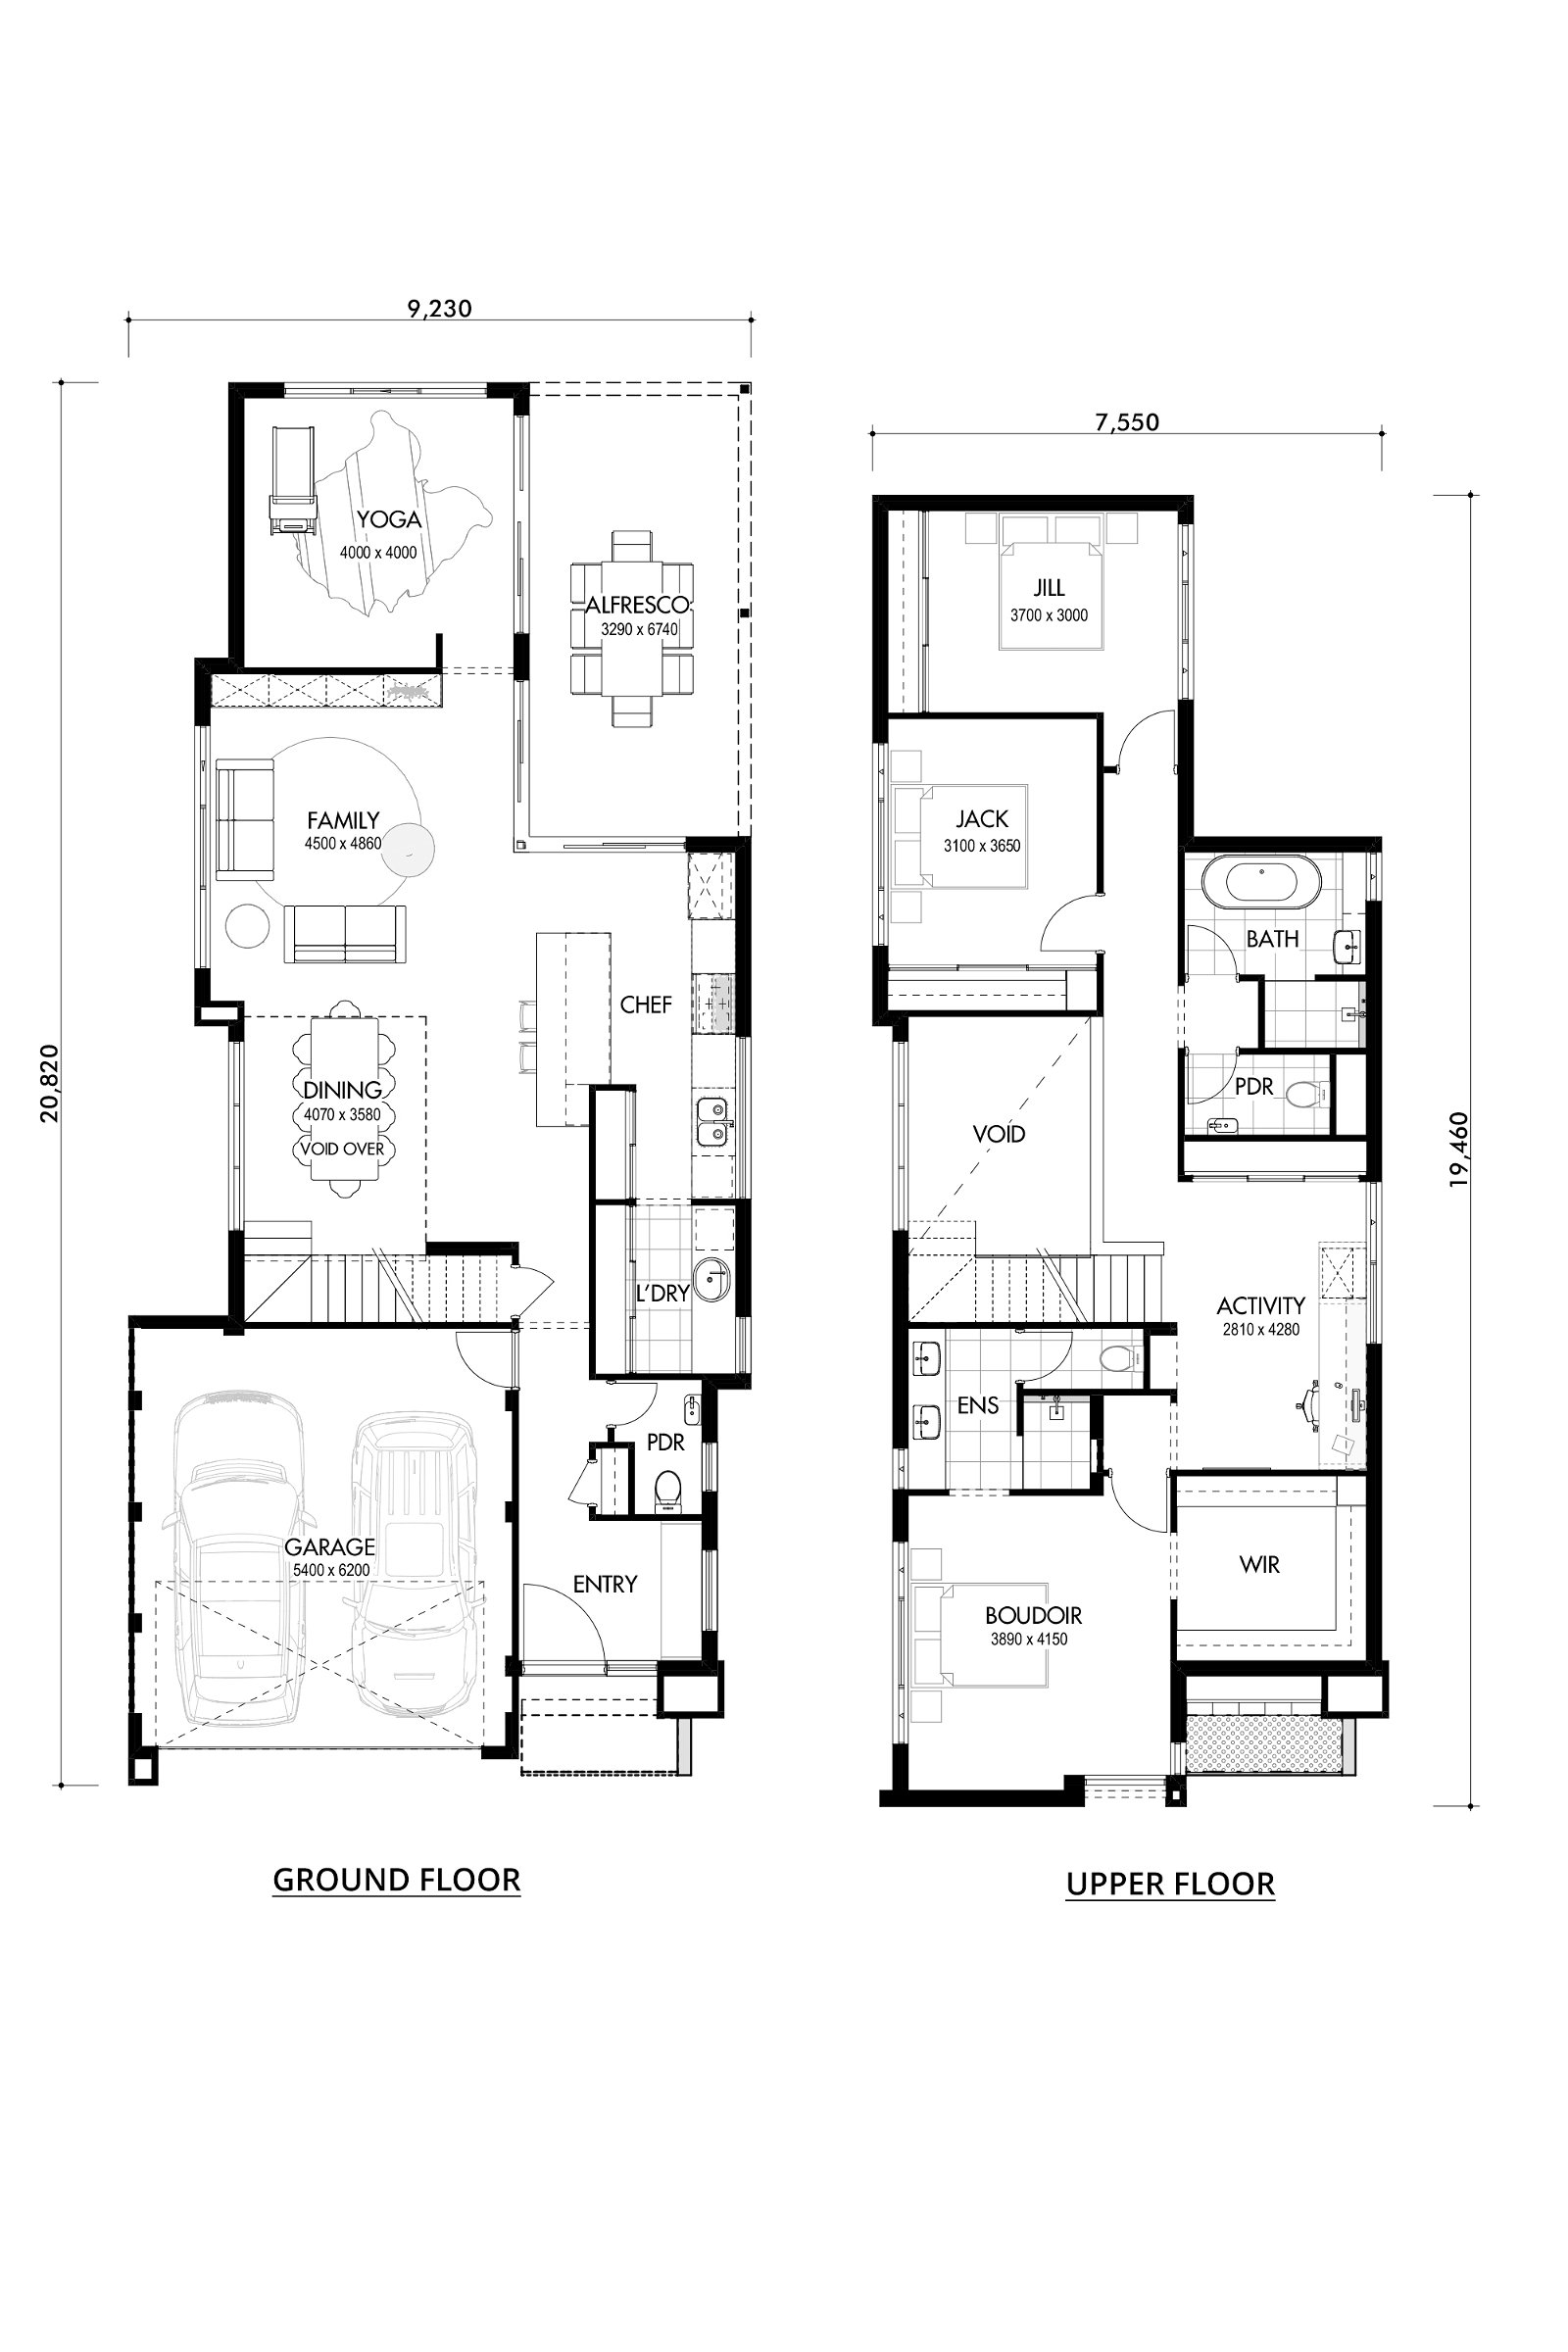 Residential Attitudes - Zen Den - Floorplan - Zen Den Floorplan Website